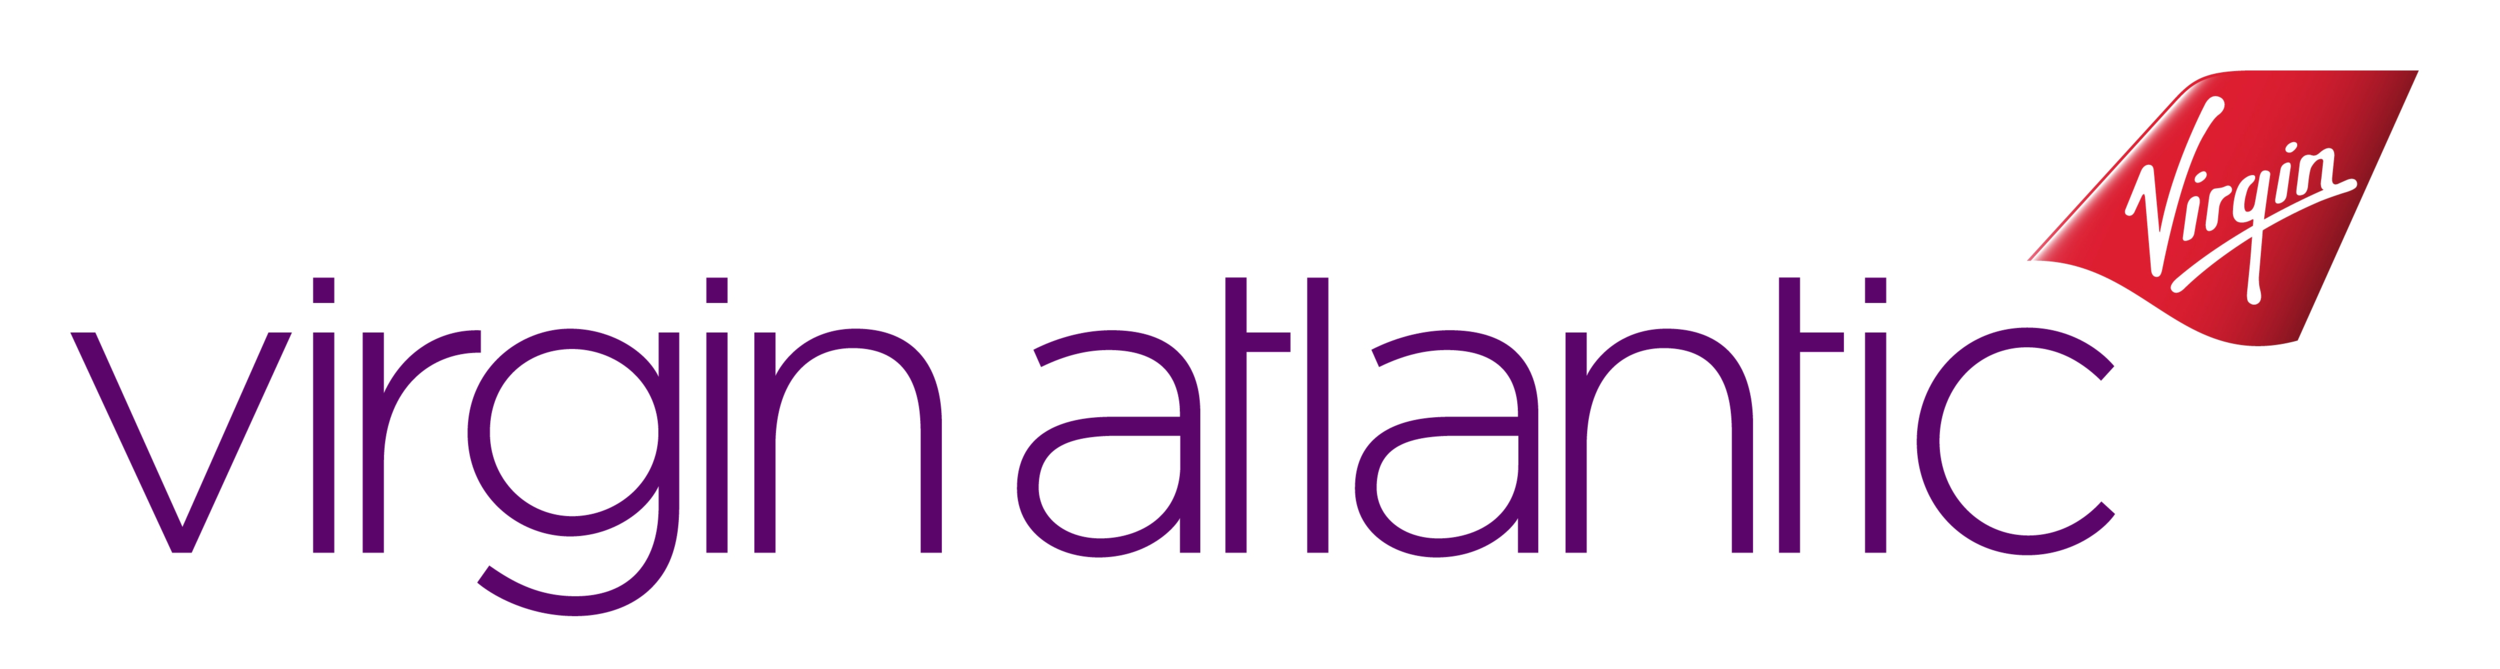 Virgin_Atlantic_logo_logotype.png